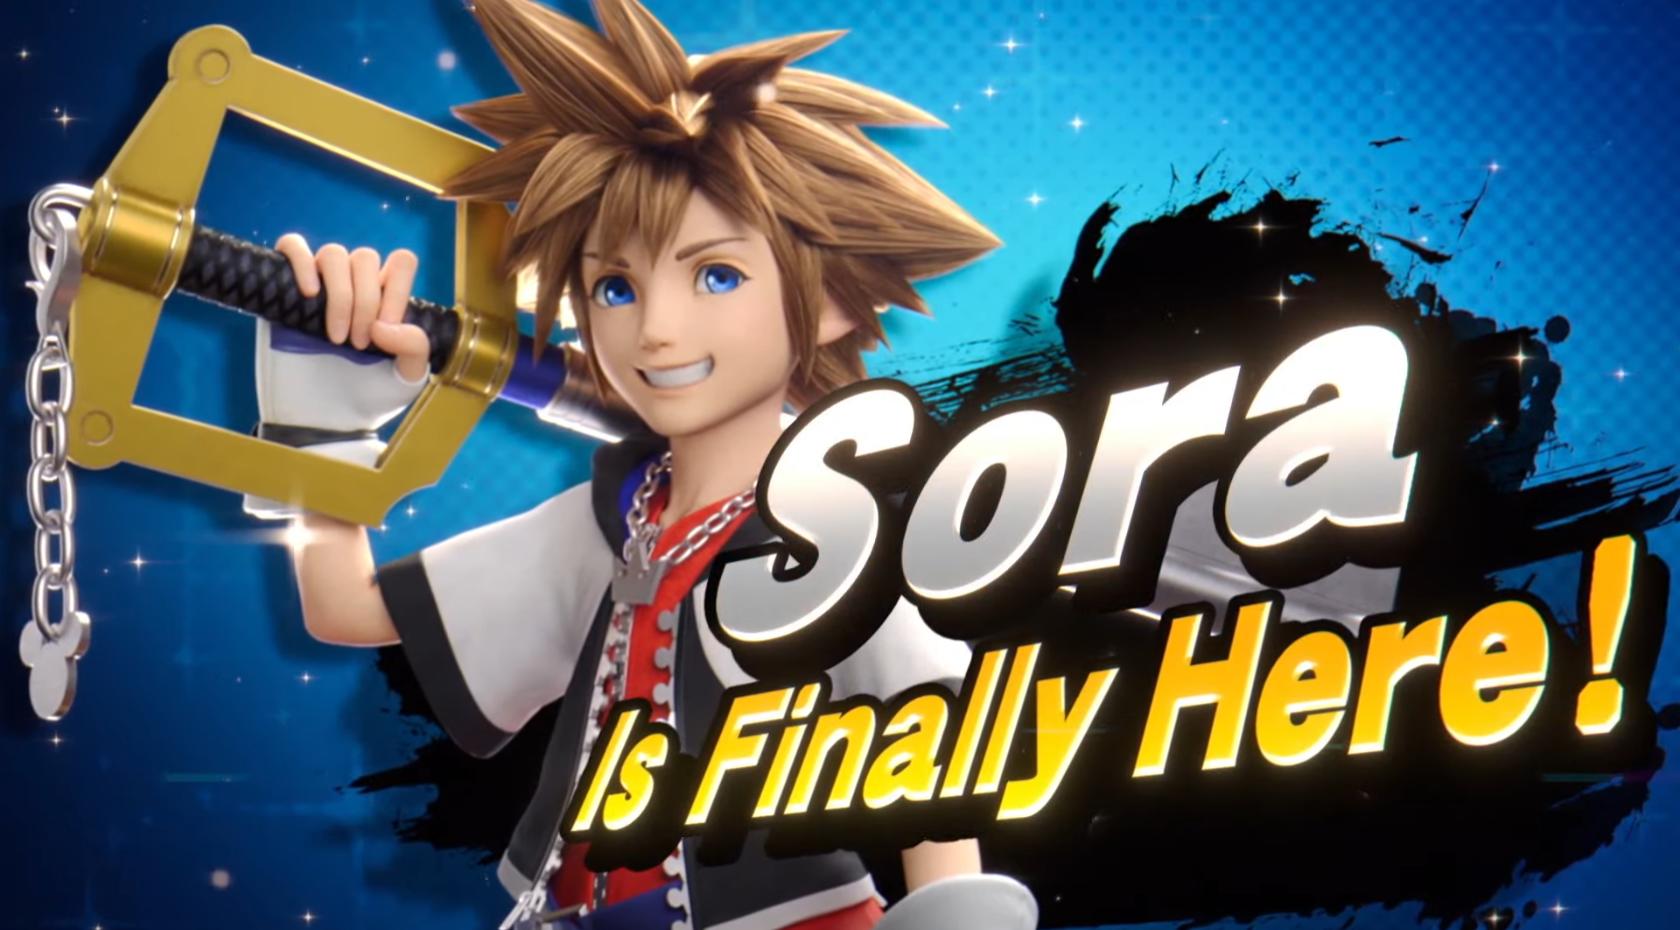 Sora Smash Bros Ultimate Announcement